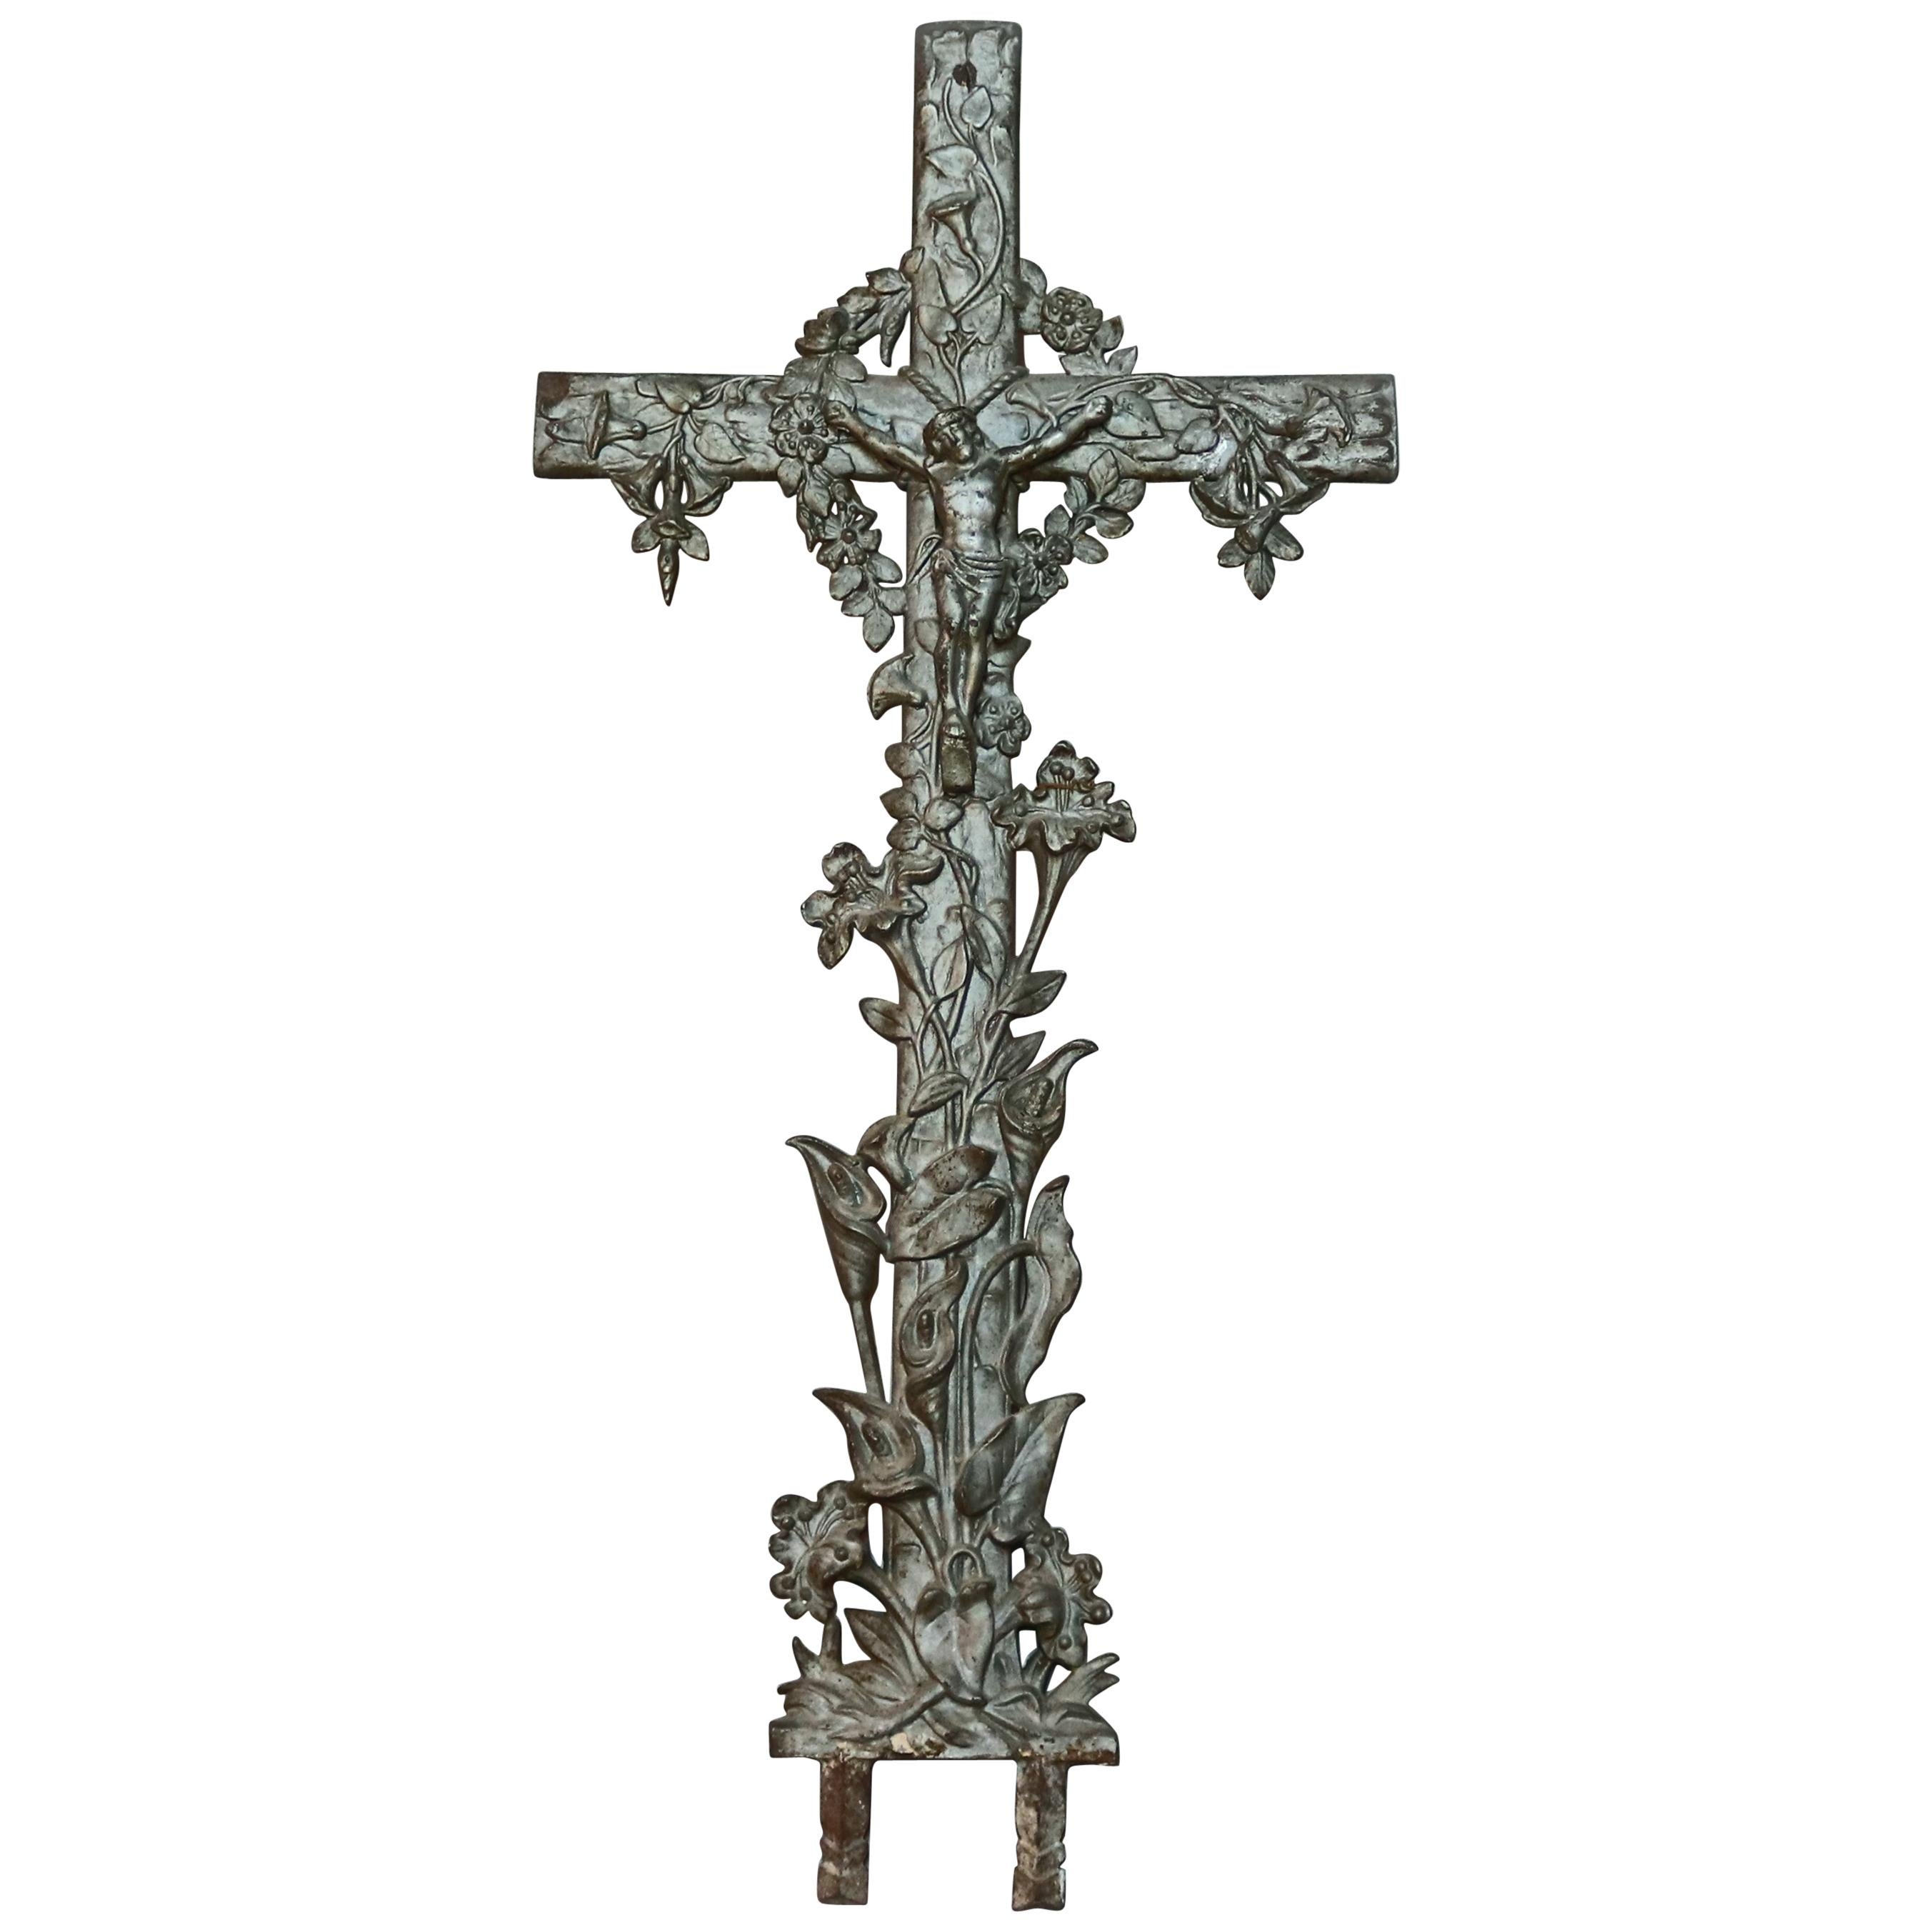 Antique Large Cast Iron High Relief Garden Crucifix, circa 1900